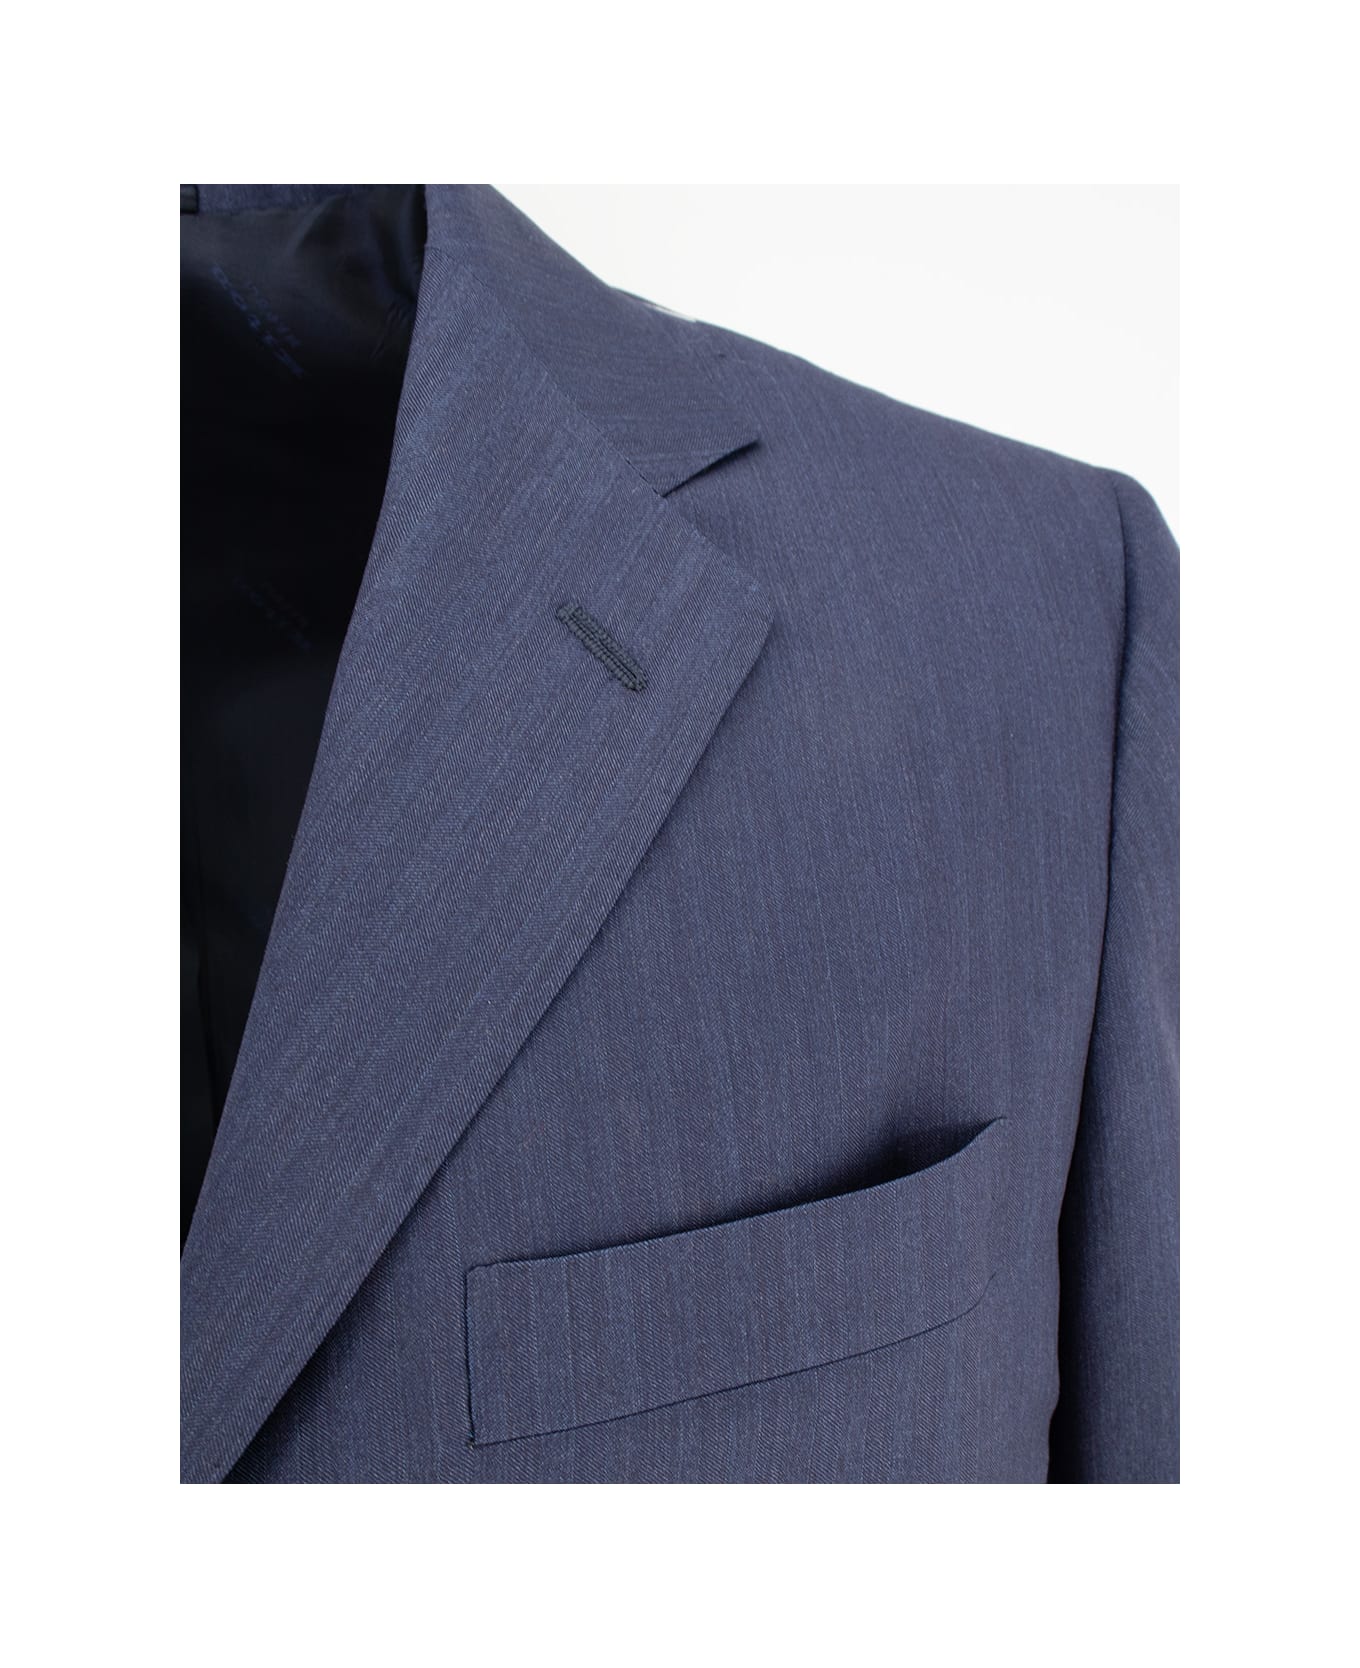 Kiton Suit - BLUE